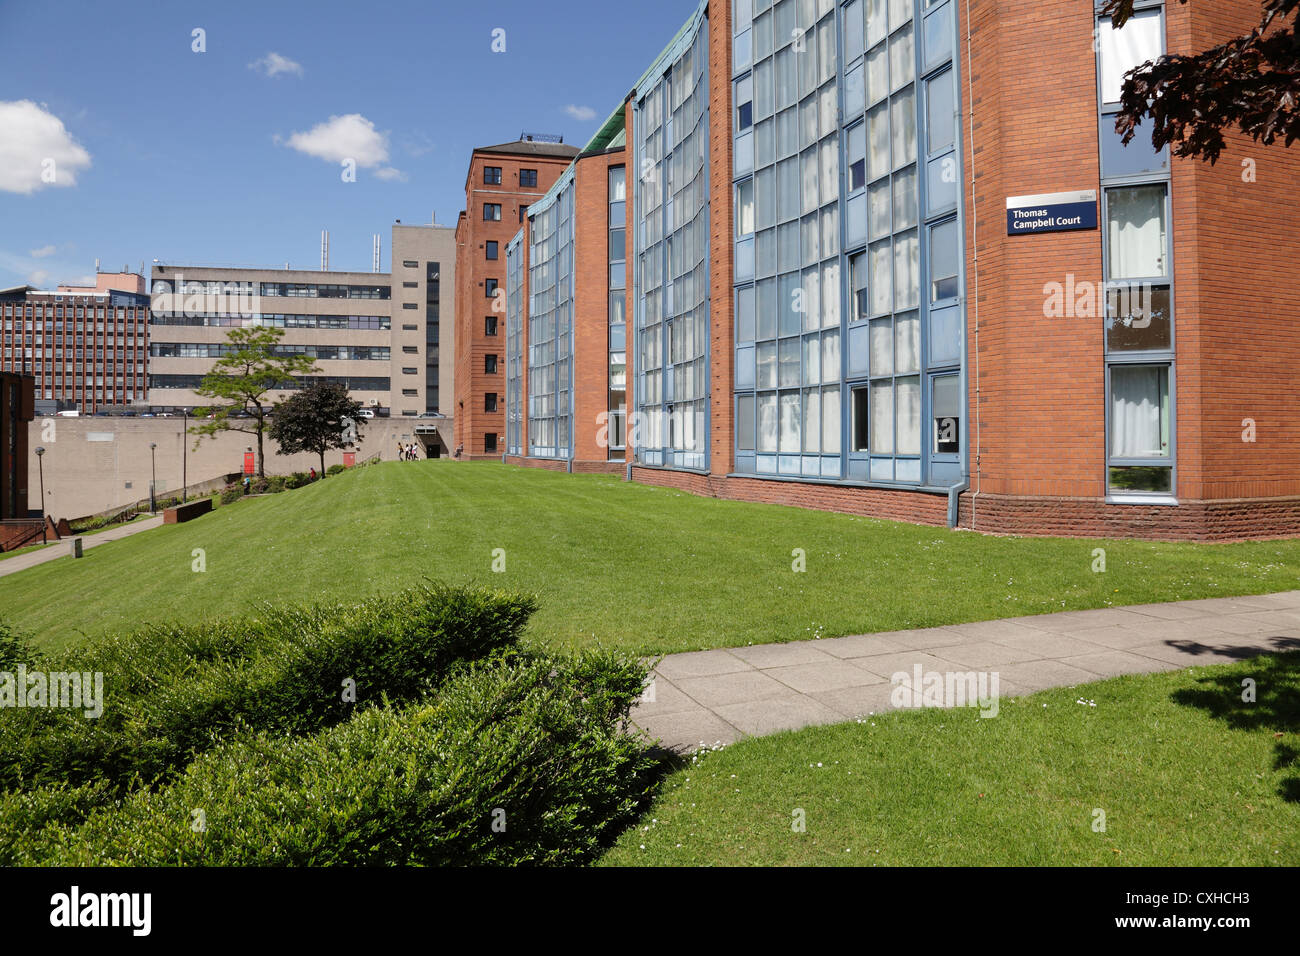 University of Strathclyde campus student accommodation, Thomas Campbell Court, Glasgow, Scotland, UK Stock Photo